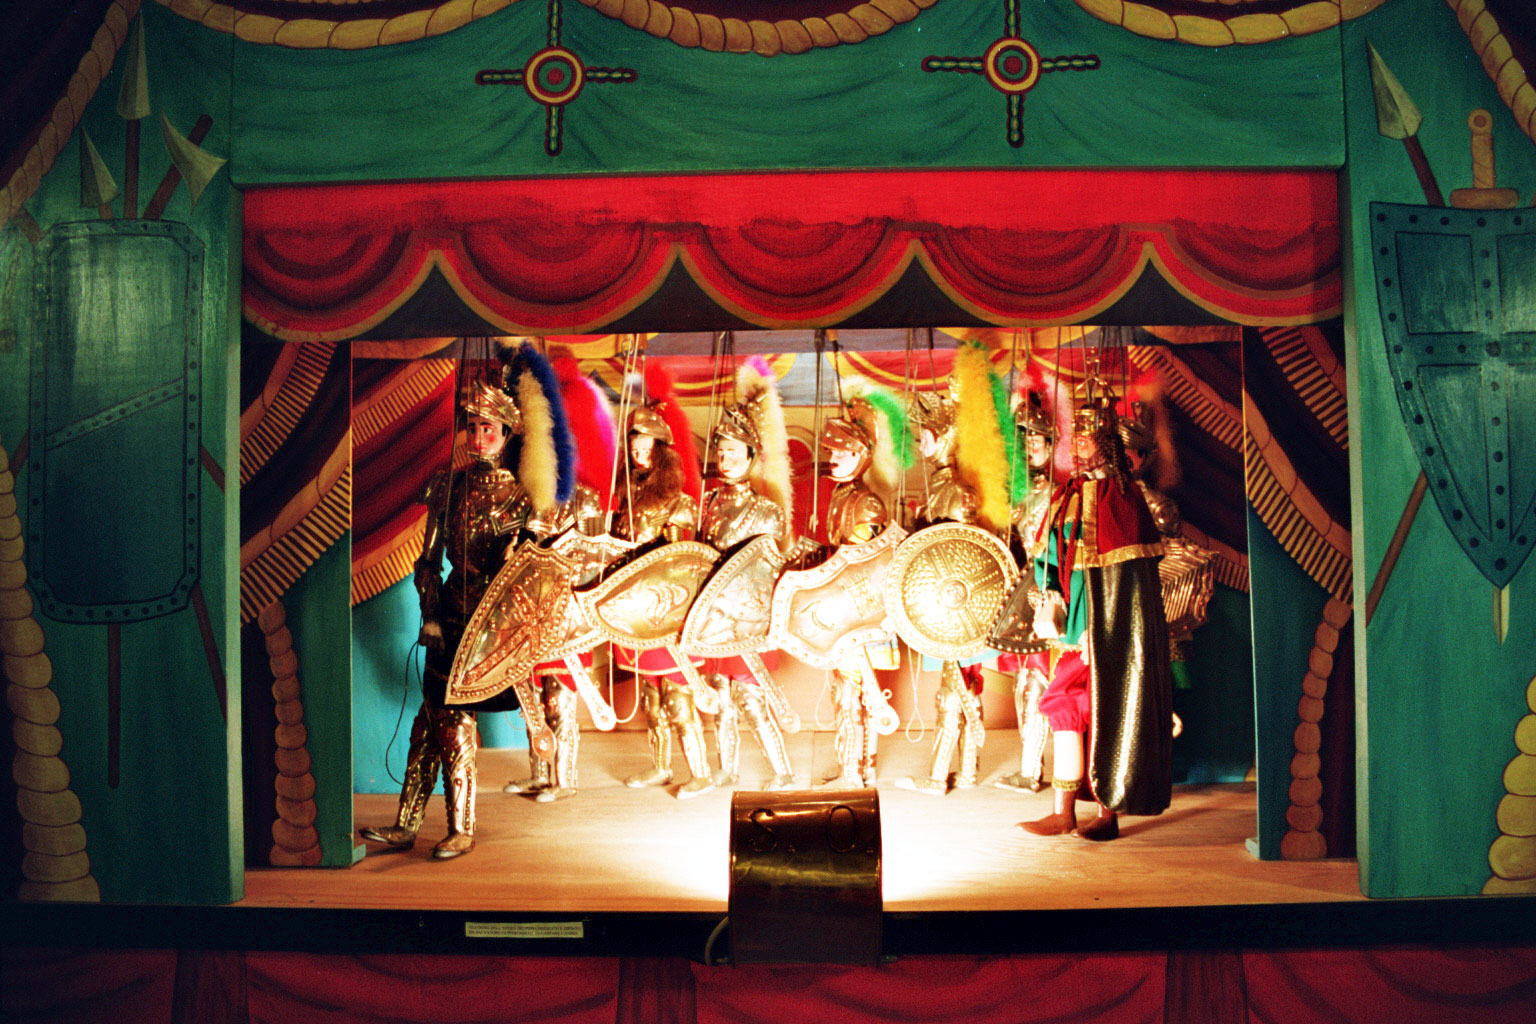 Il teatro dei Pupi
Bjs, CC0, via Wikimedia Commons